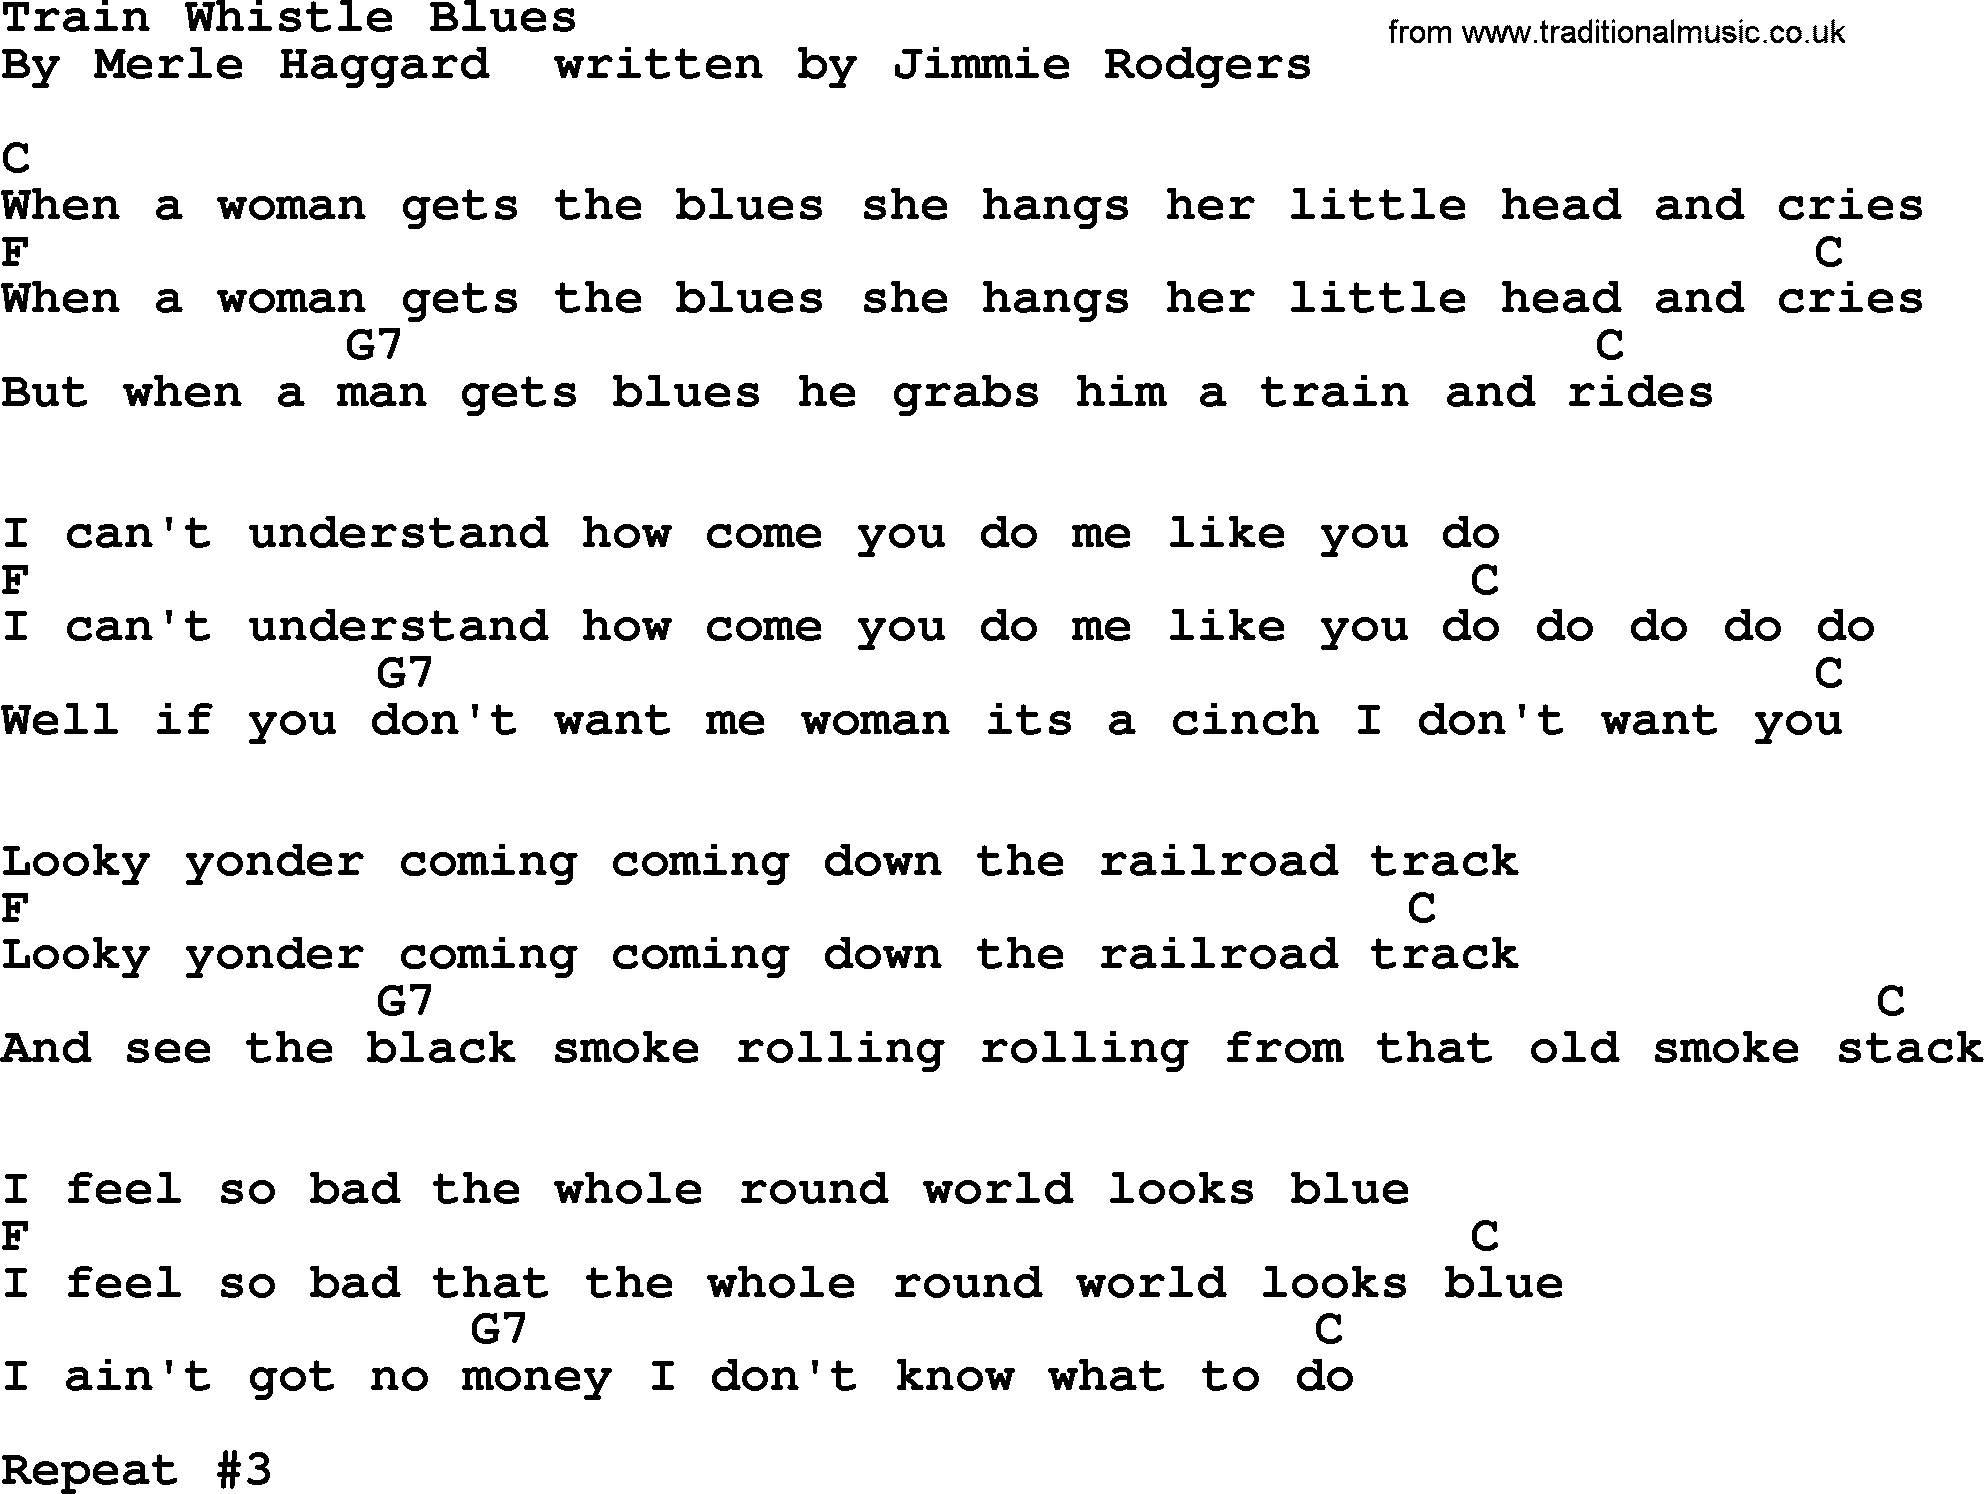 Merle Haggard song: Train Whistle Blues, lyrics and chords